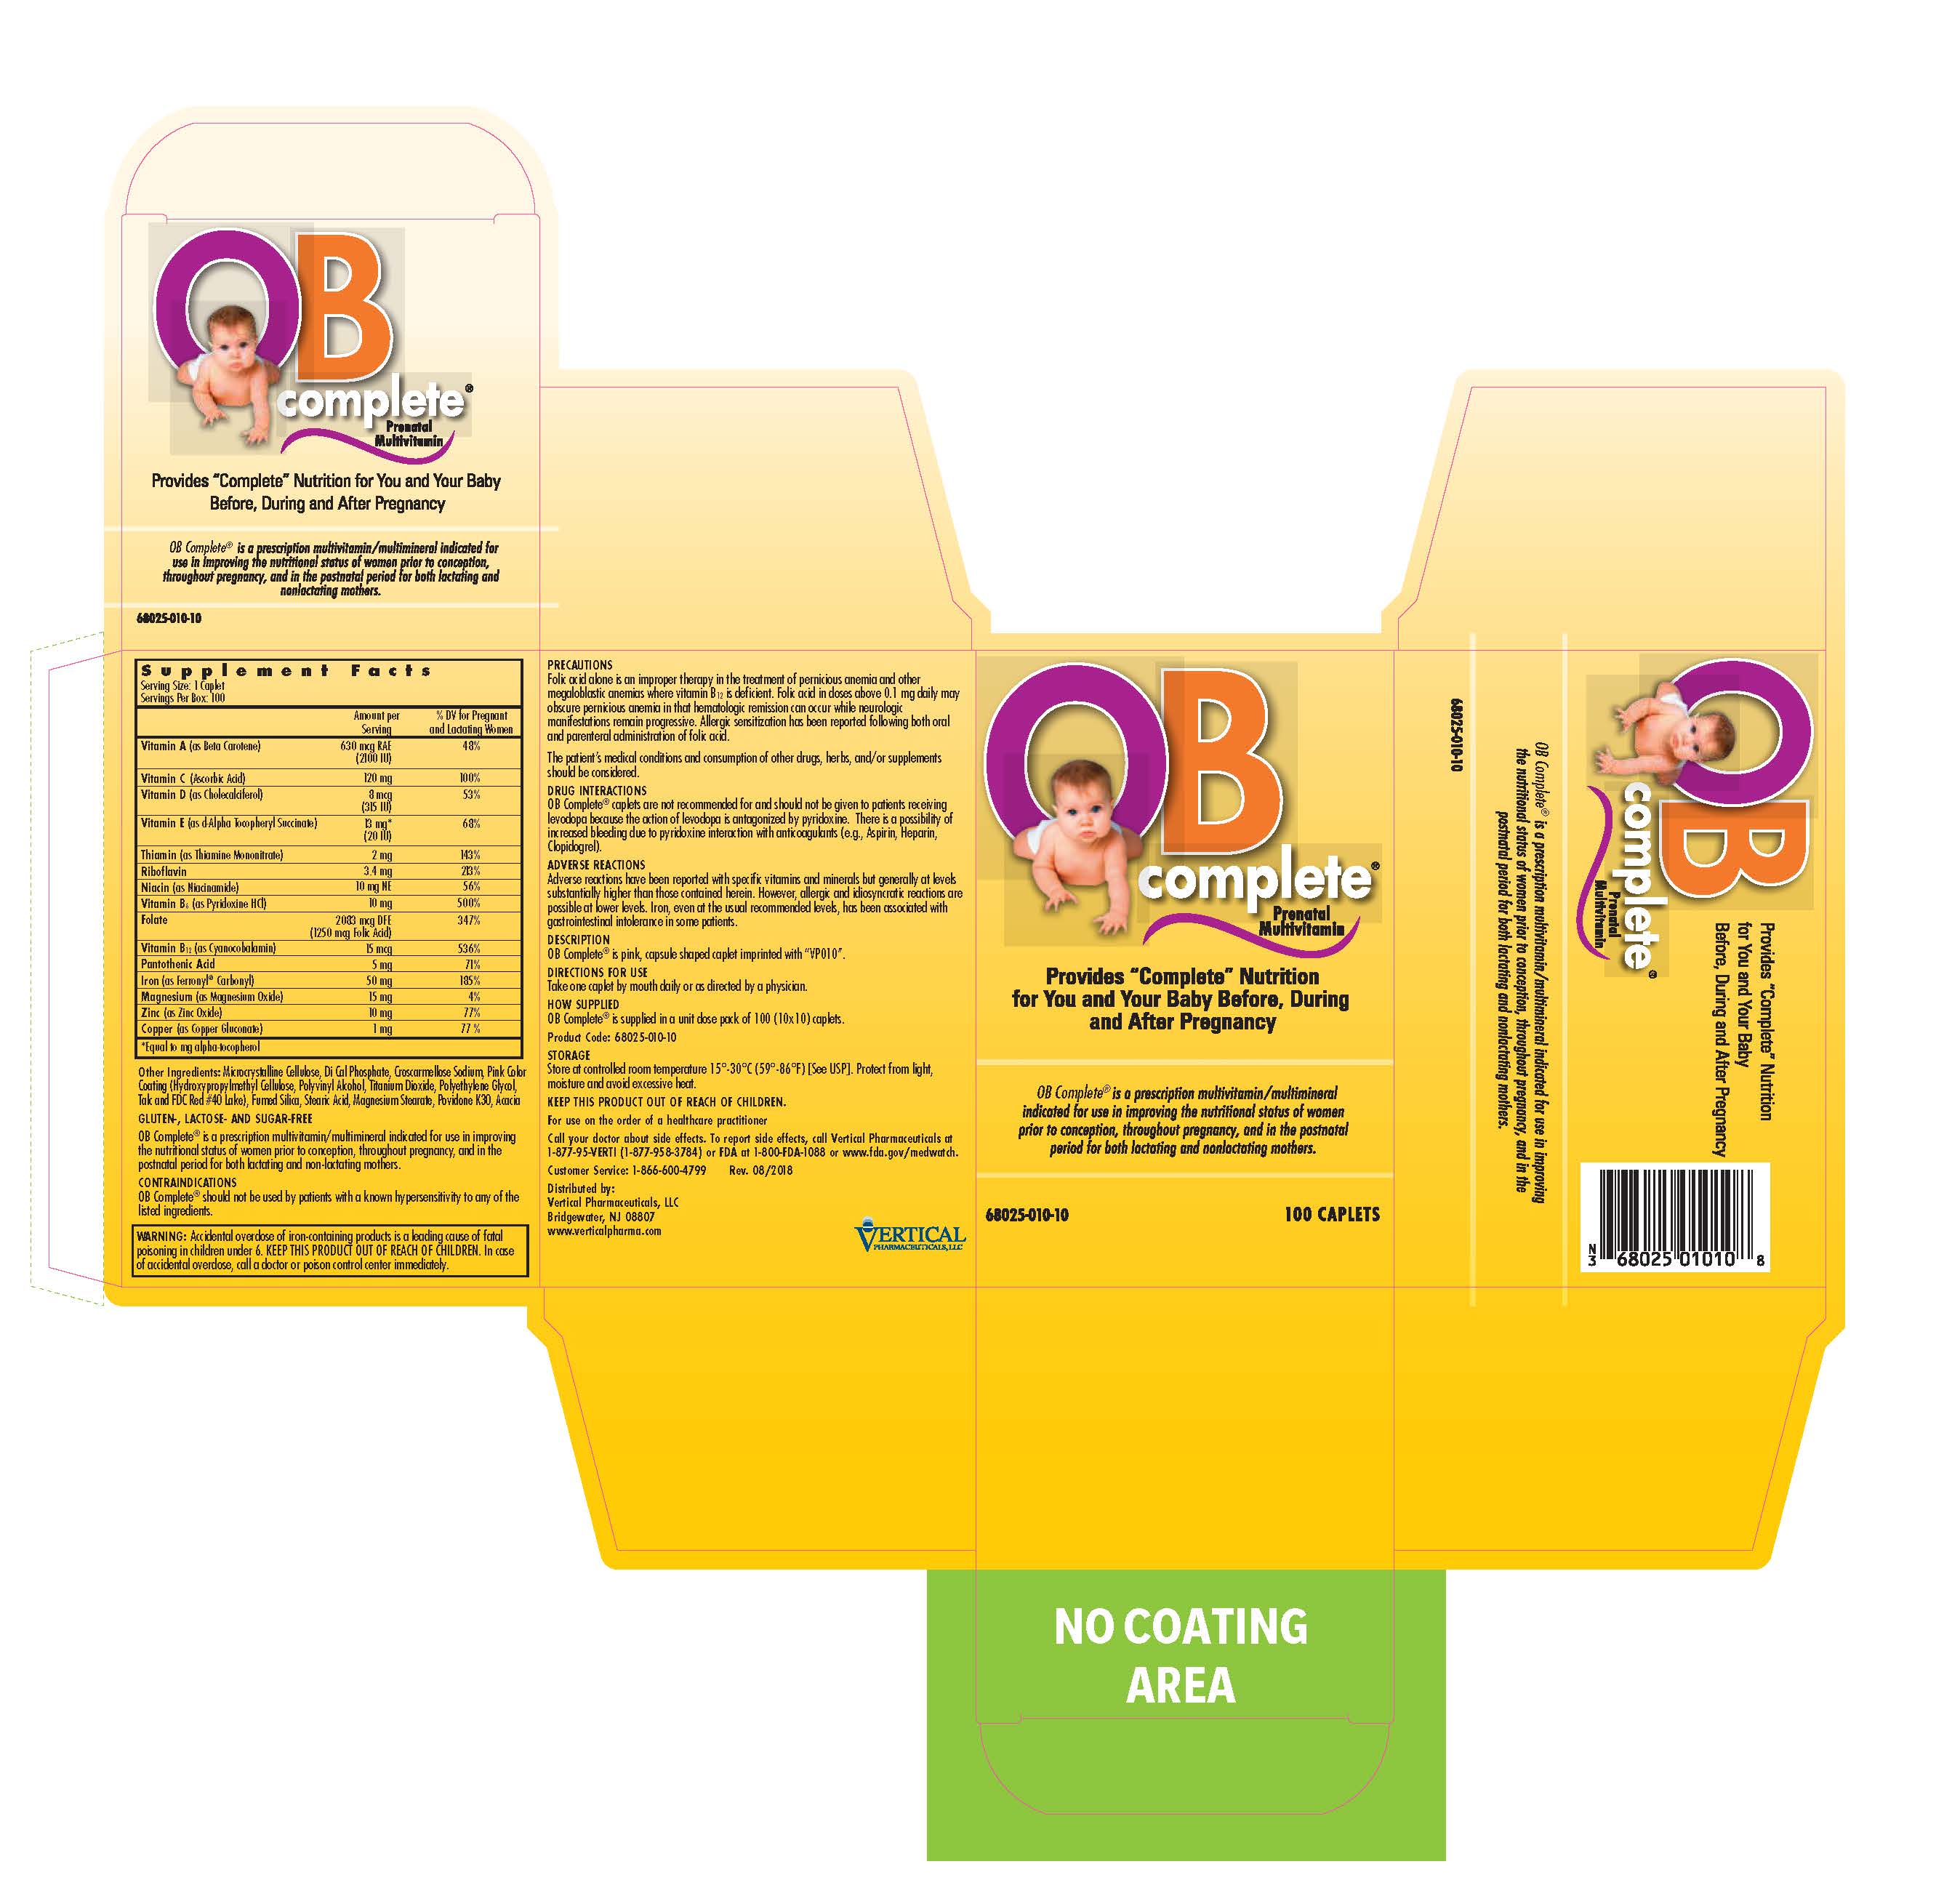 OB Complete Prenatal Carton Rev. 082018